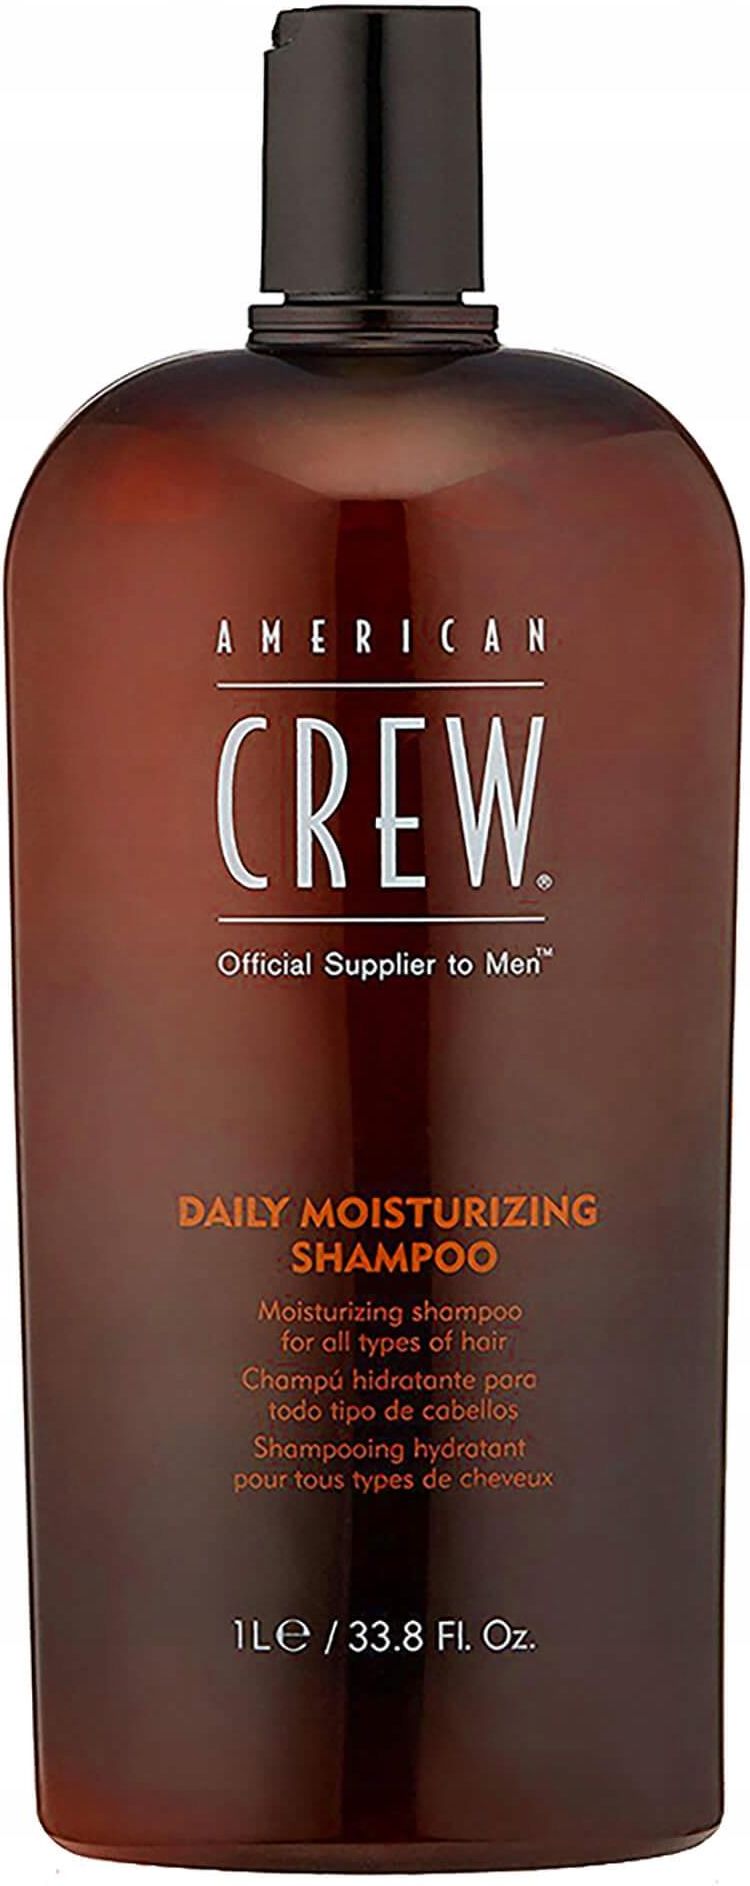 american crew szampon blond